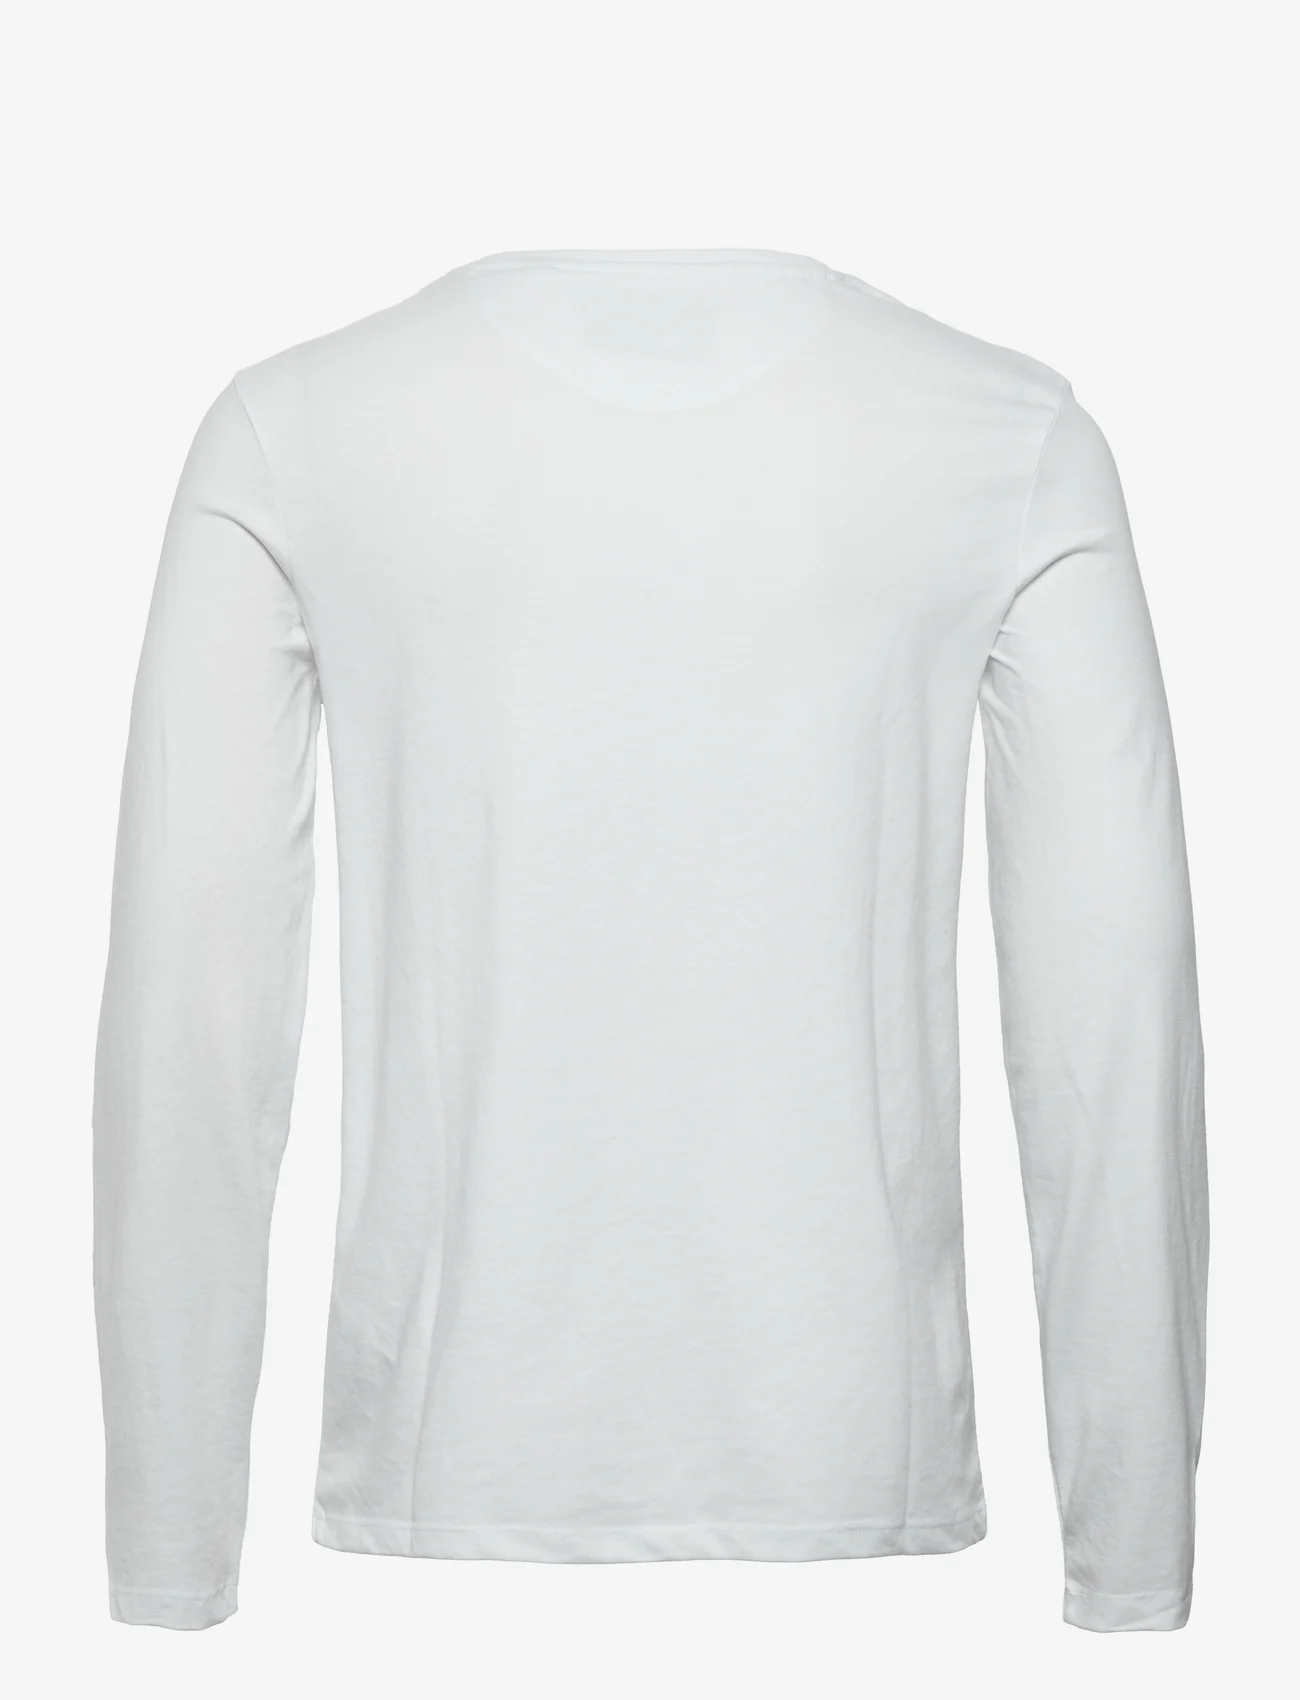 Lyle & Scott Sport - Long Sleeve Martin Top - långärmade tröjor - white - 1